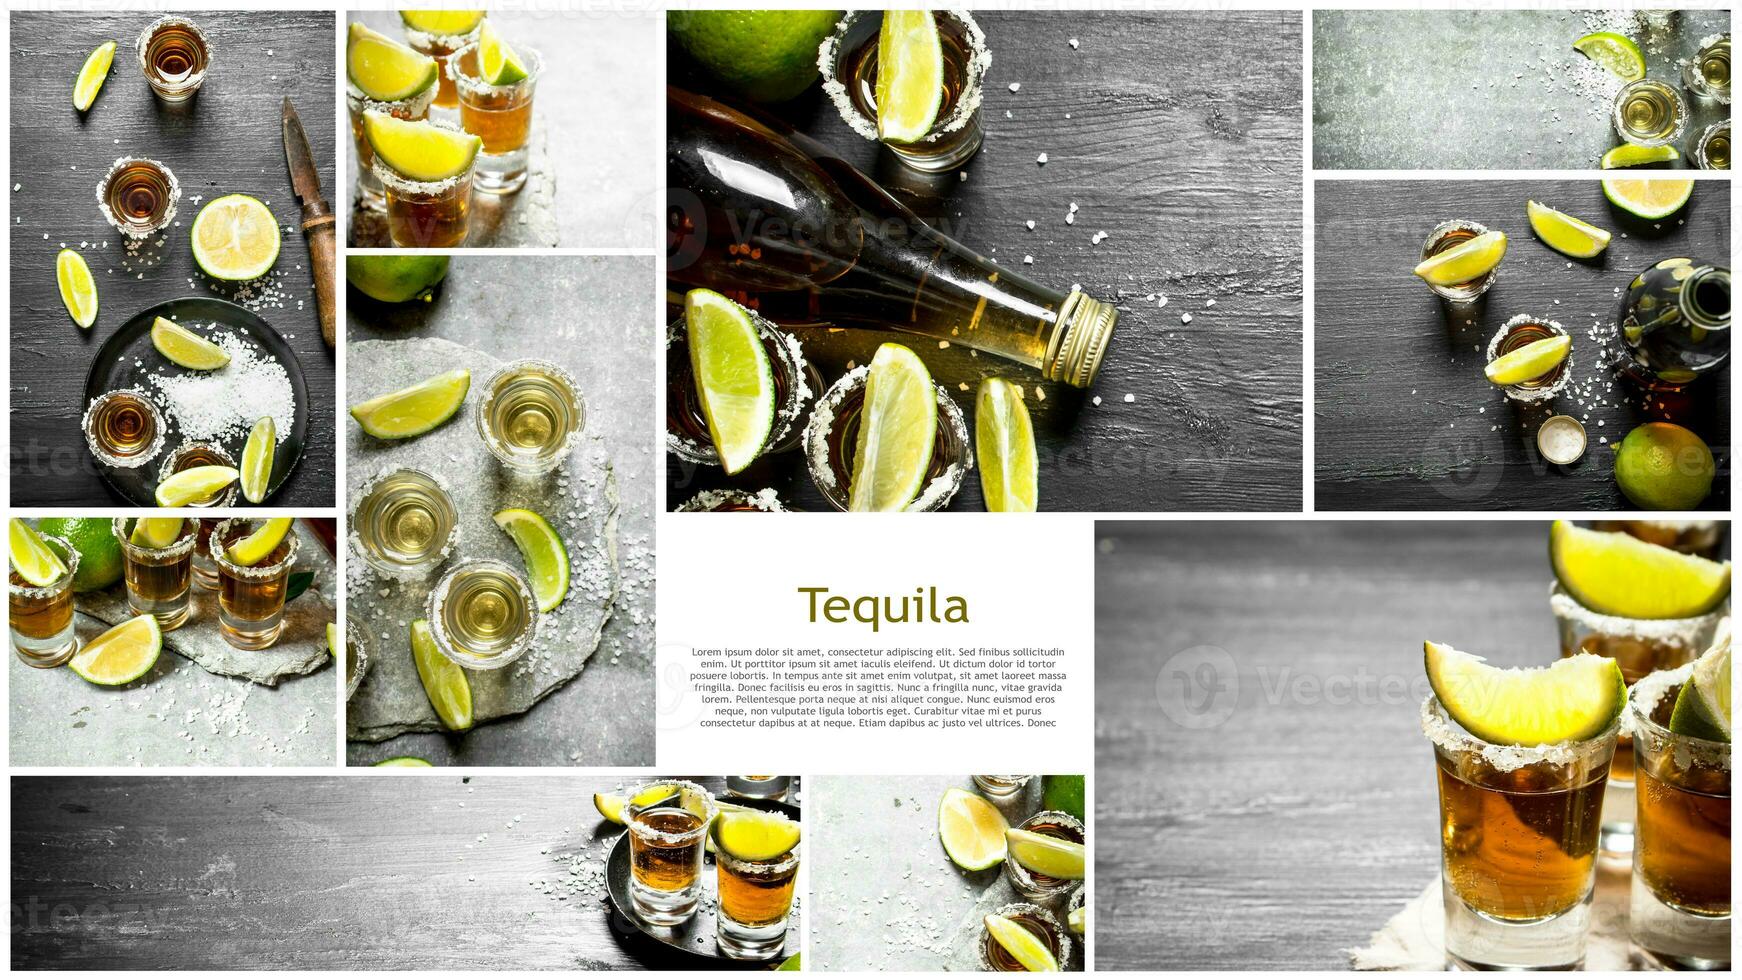 comida collage de tequila. foto